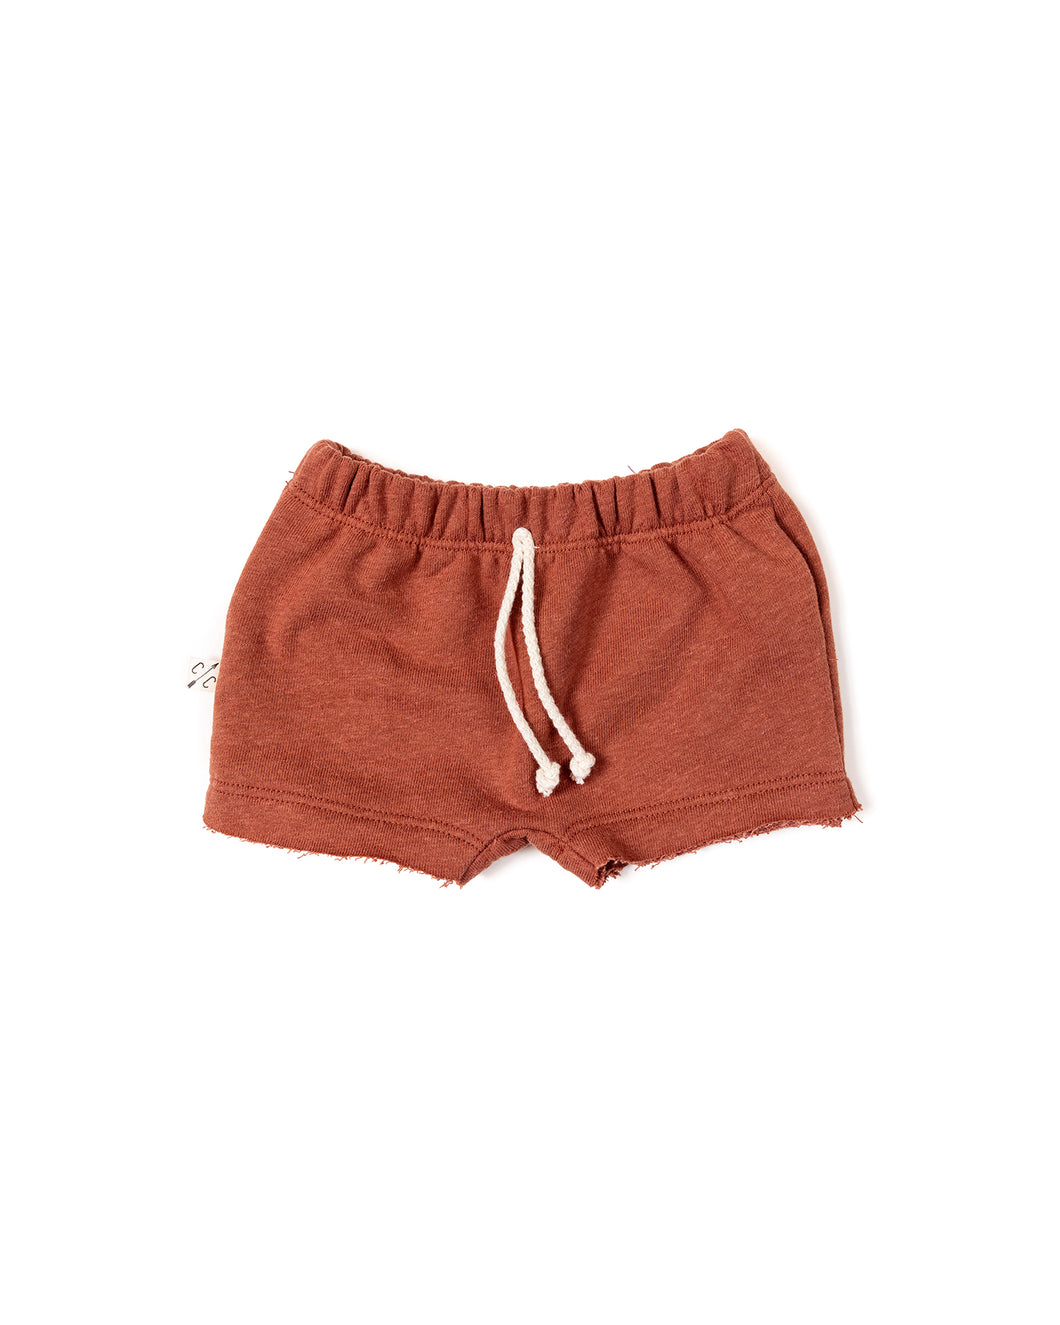 boy shorts - terra cotta